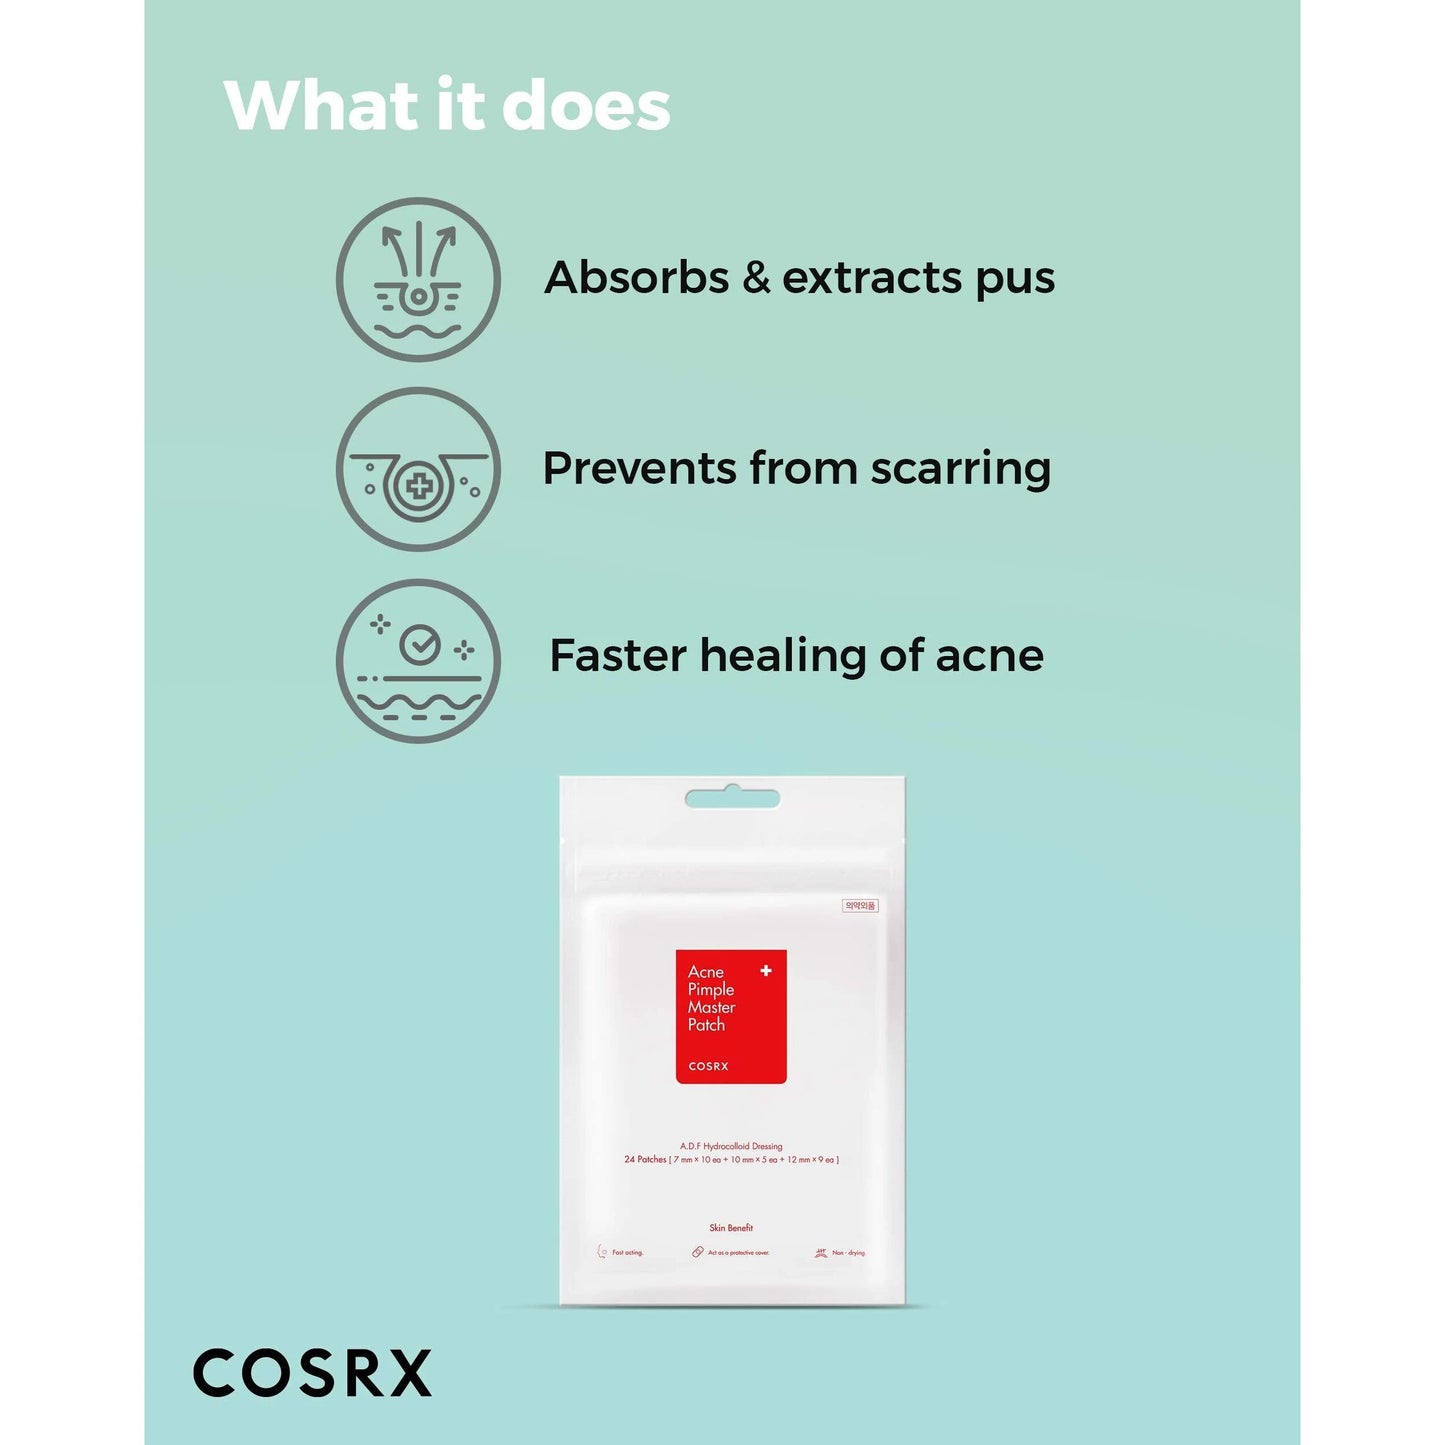 Cosrx - Acne Pimple Master Patch